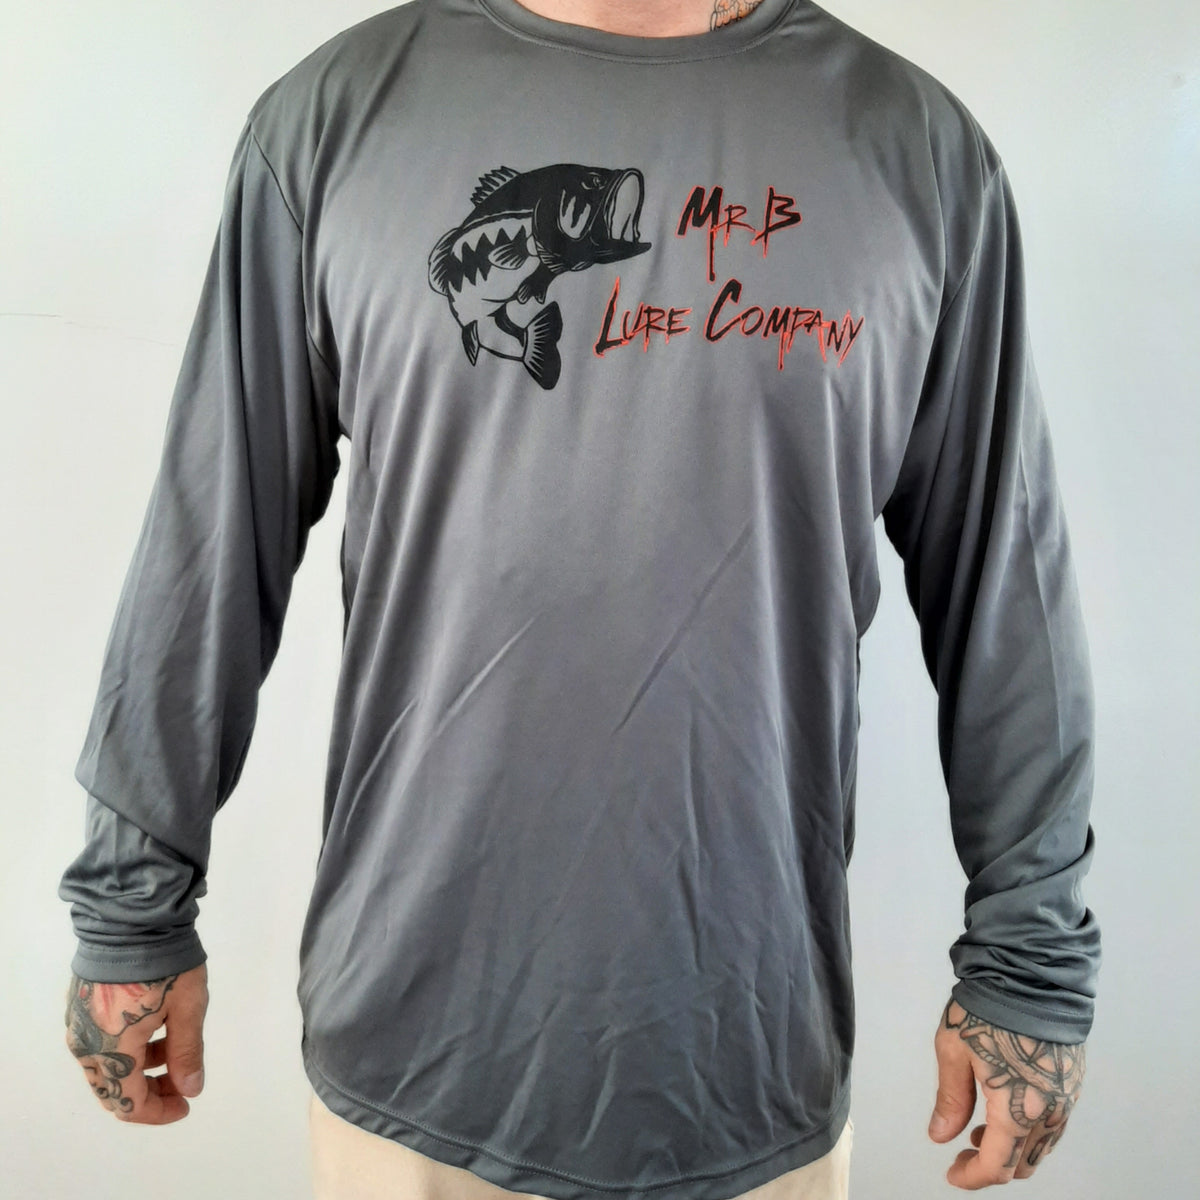 Long Sleeve Performance Cooling Shirt – Mr B Lure Company